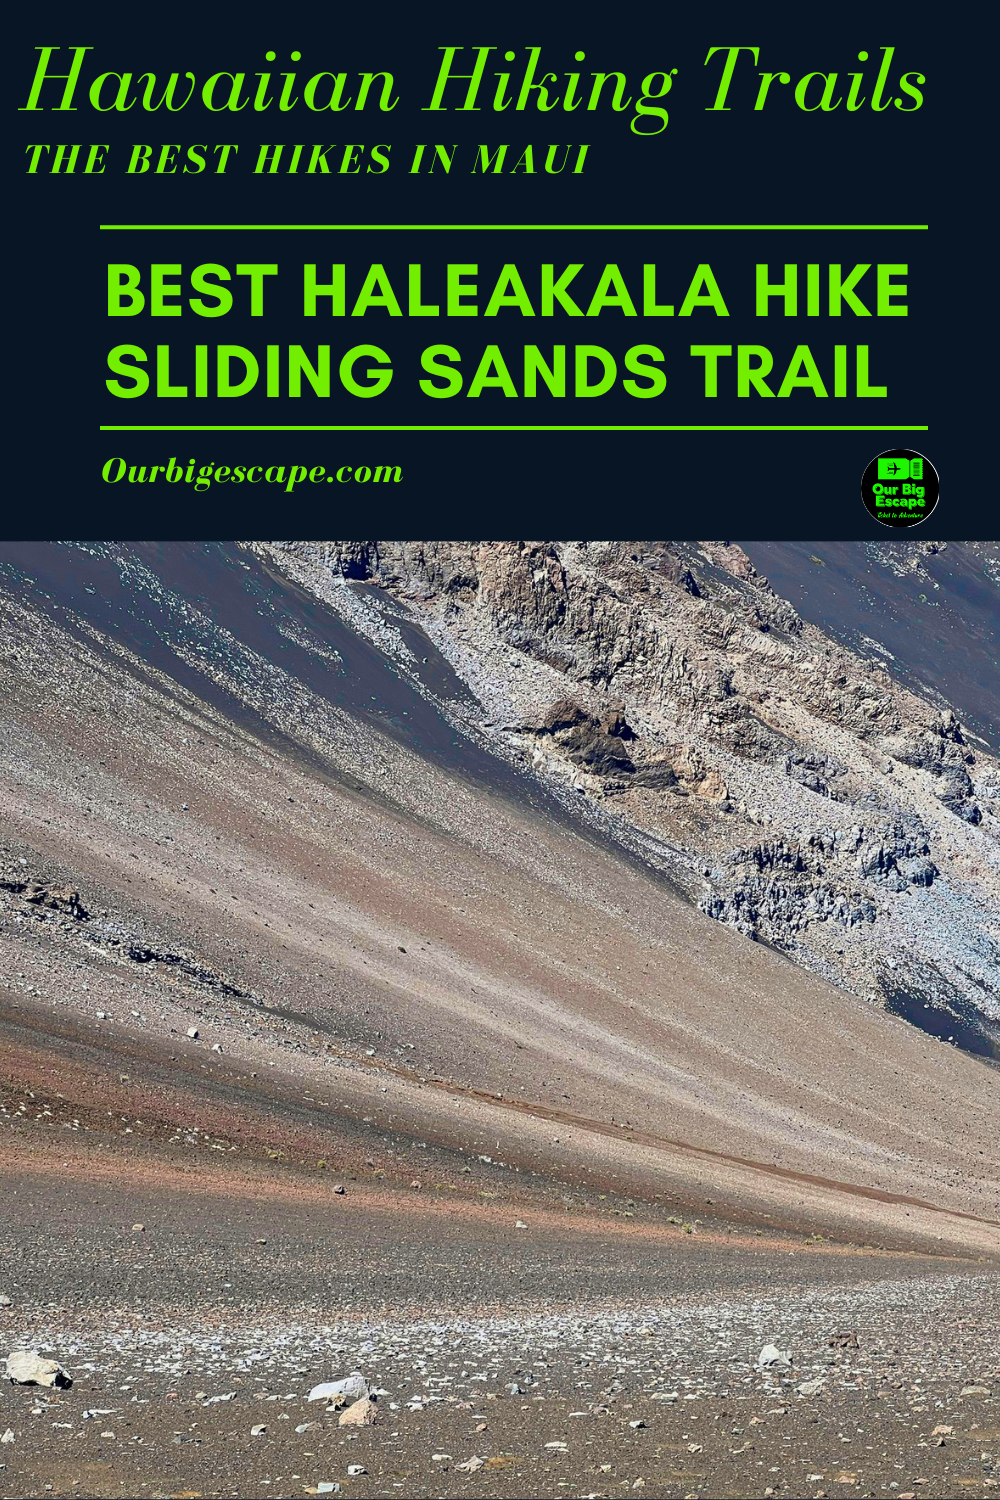 Hawaiian Hiking Trails - Best Haleakala Hike - Sliding Sands Trail